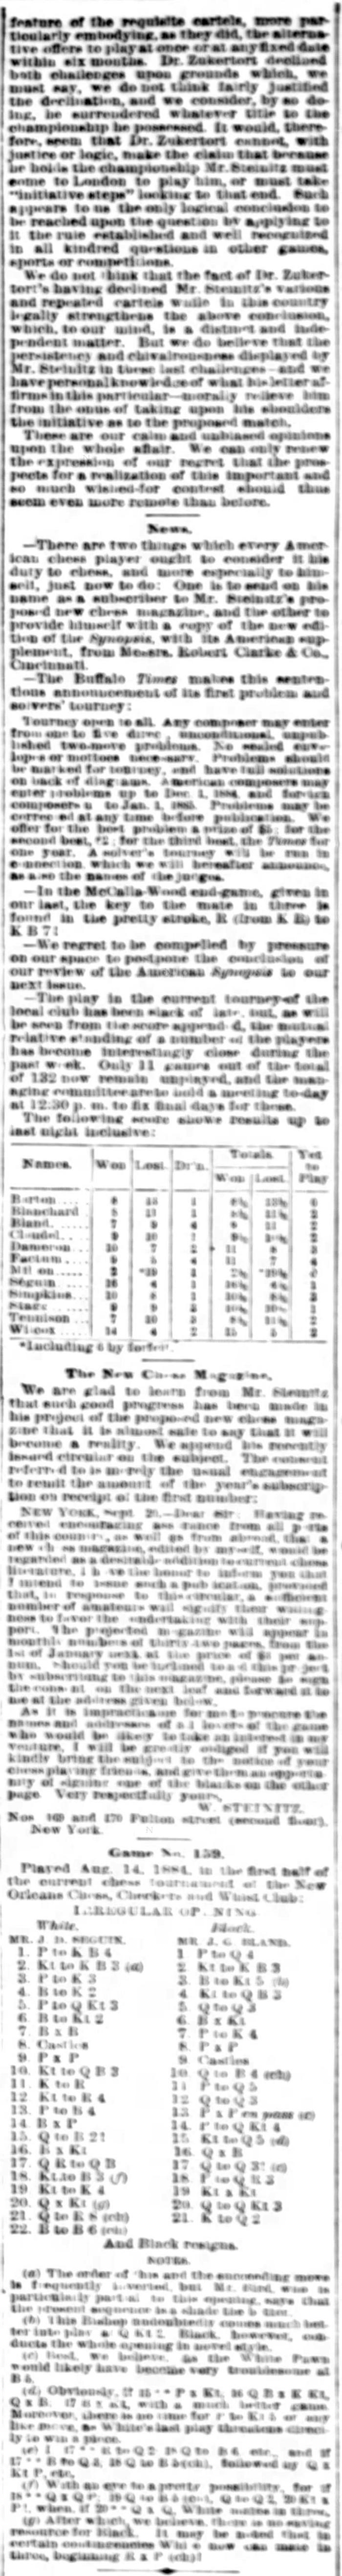 1884.10.05-02 New Orleans Times-Democrat.jpg